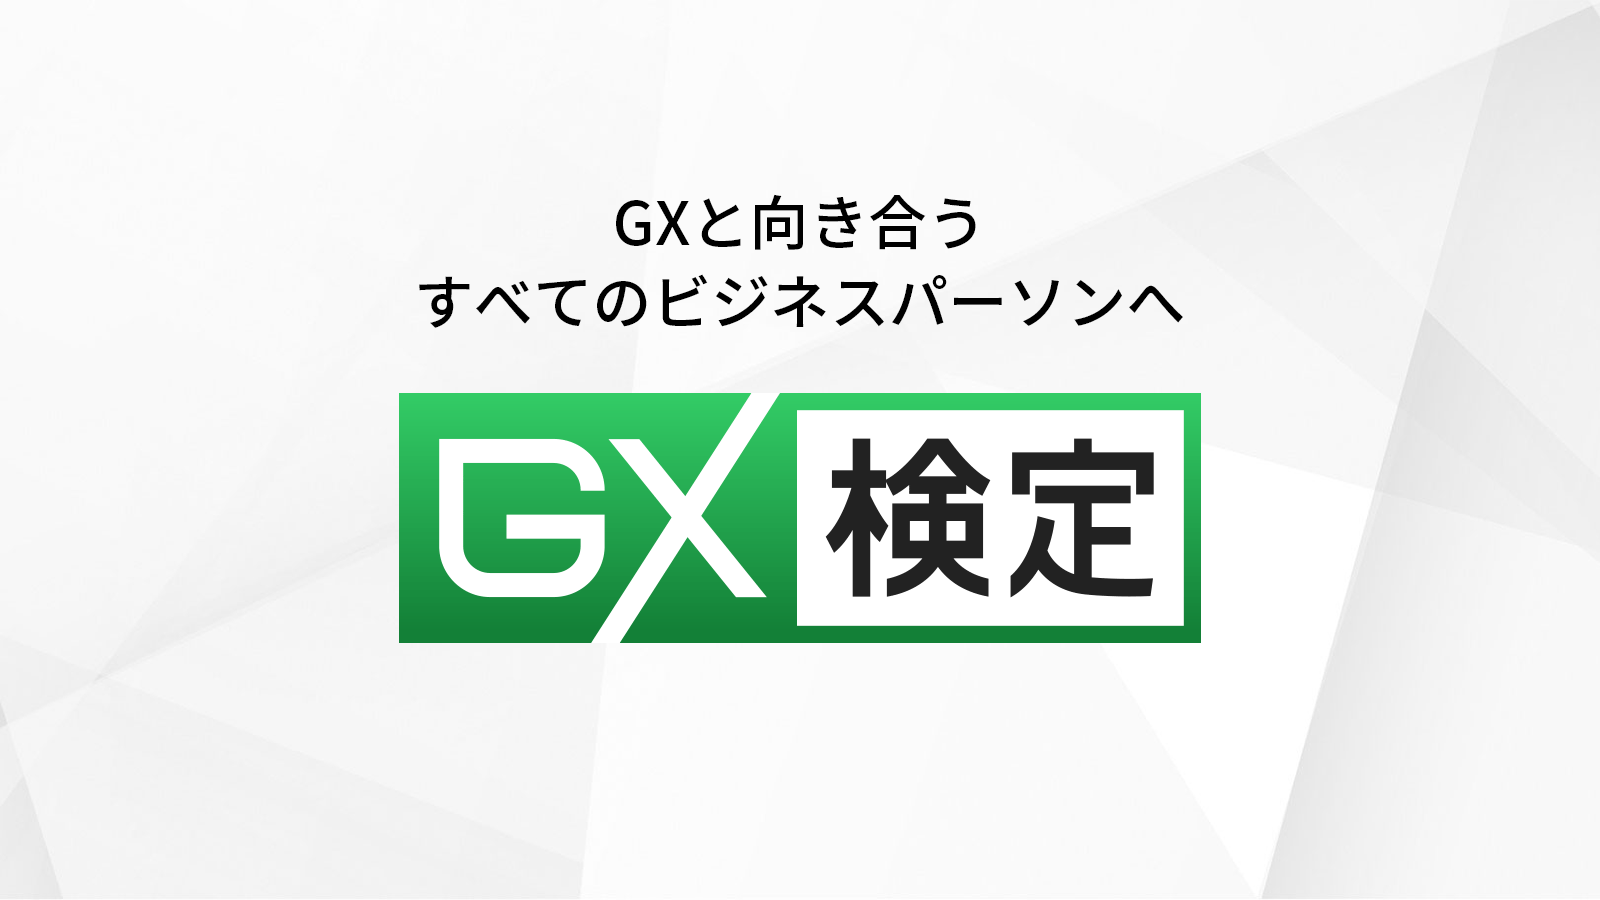 GXニュース GX検定サイトをリニューアル致しました。